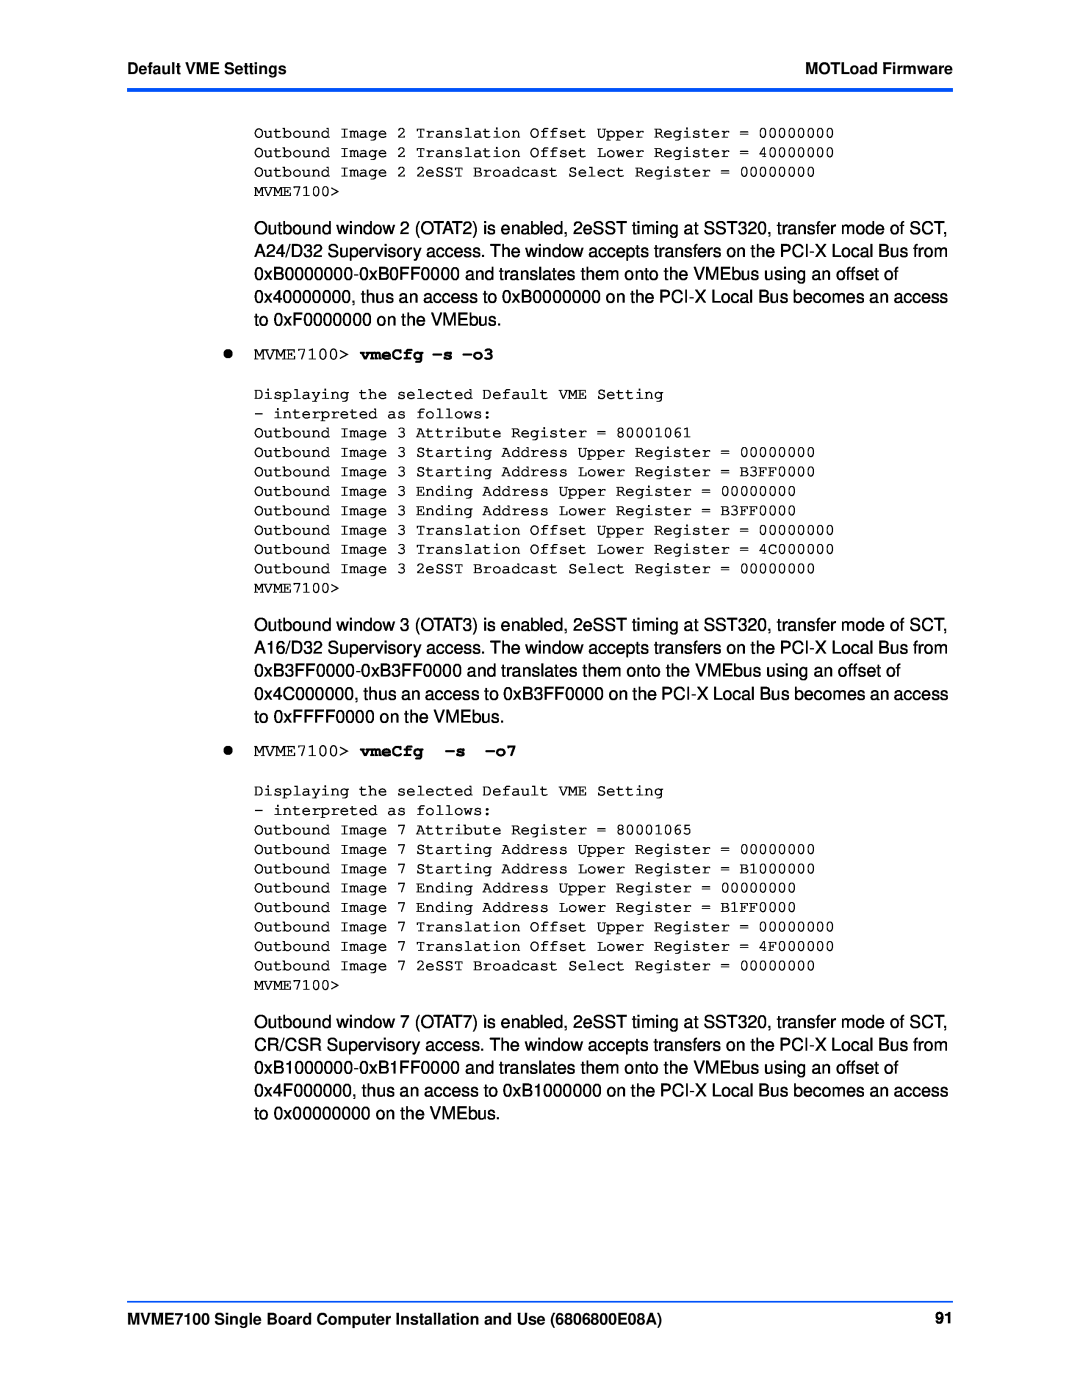 Emerson manual z MVME7100 vmeCfg -s -o3, z MVME7100 vmeCfg -s -o7 